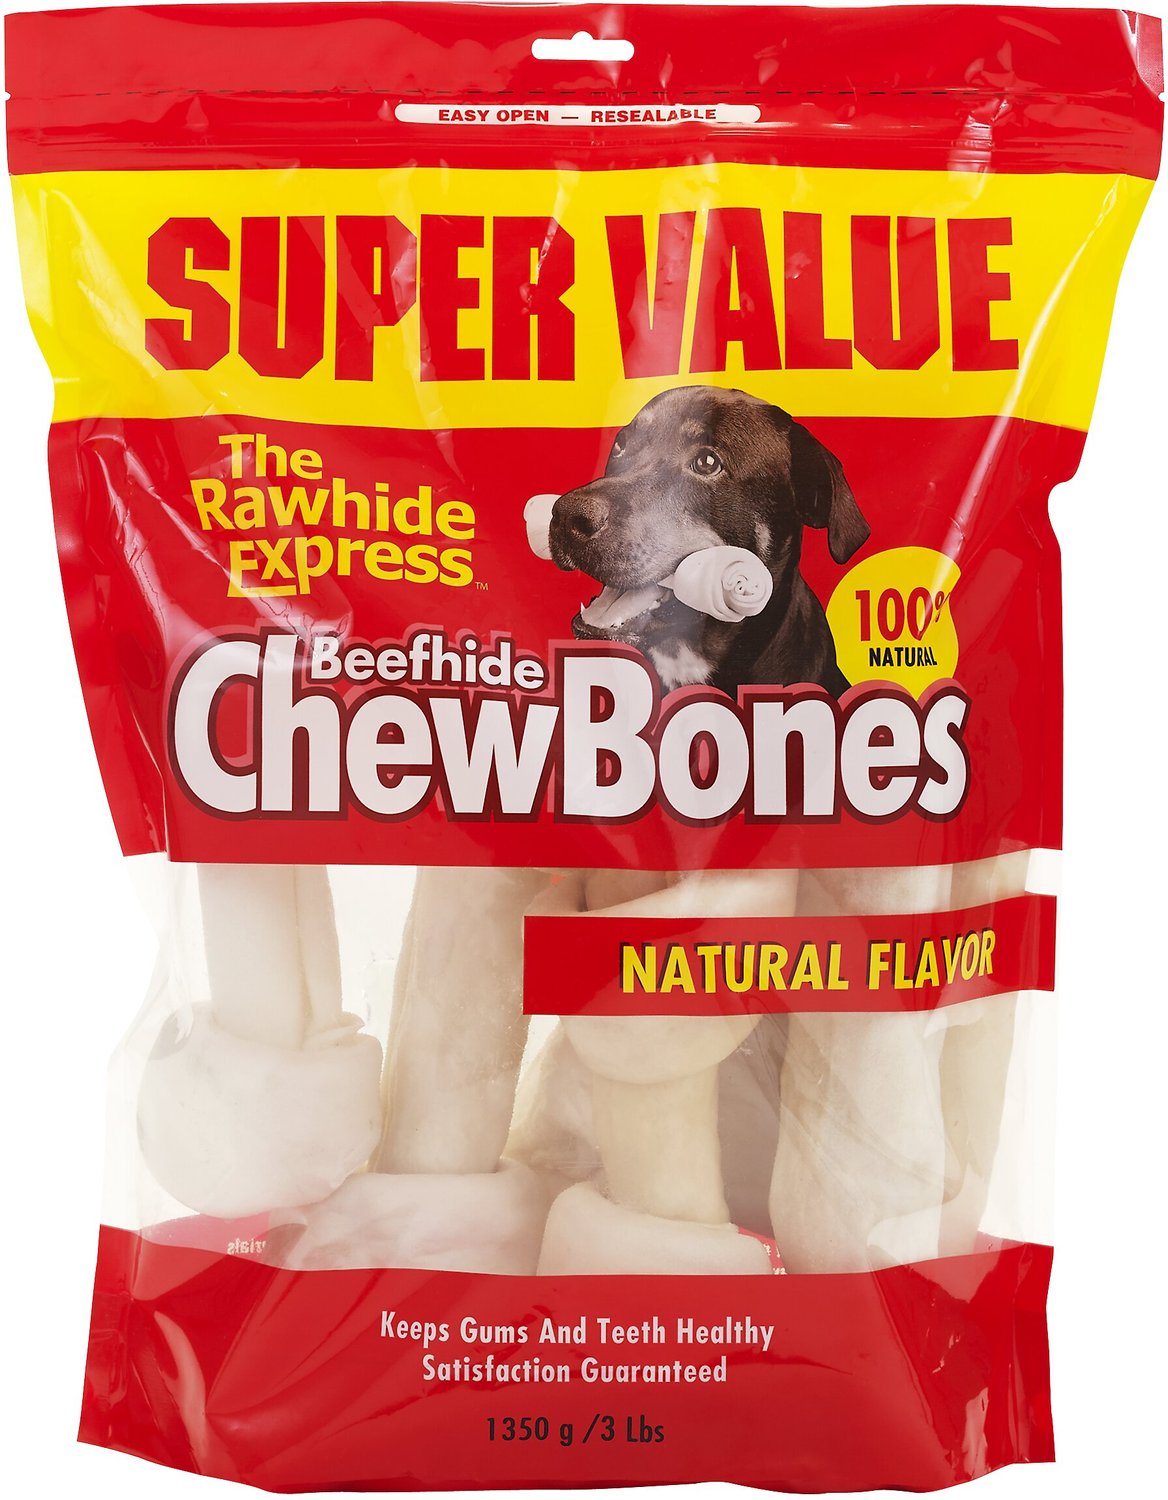 The Rawhide Express Beefhide Chew Bones 